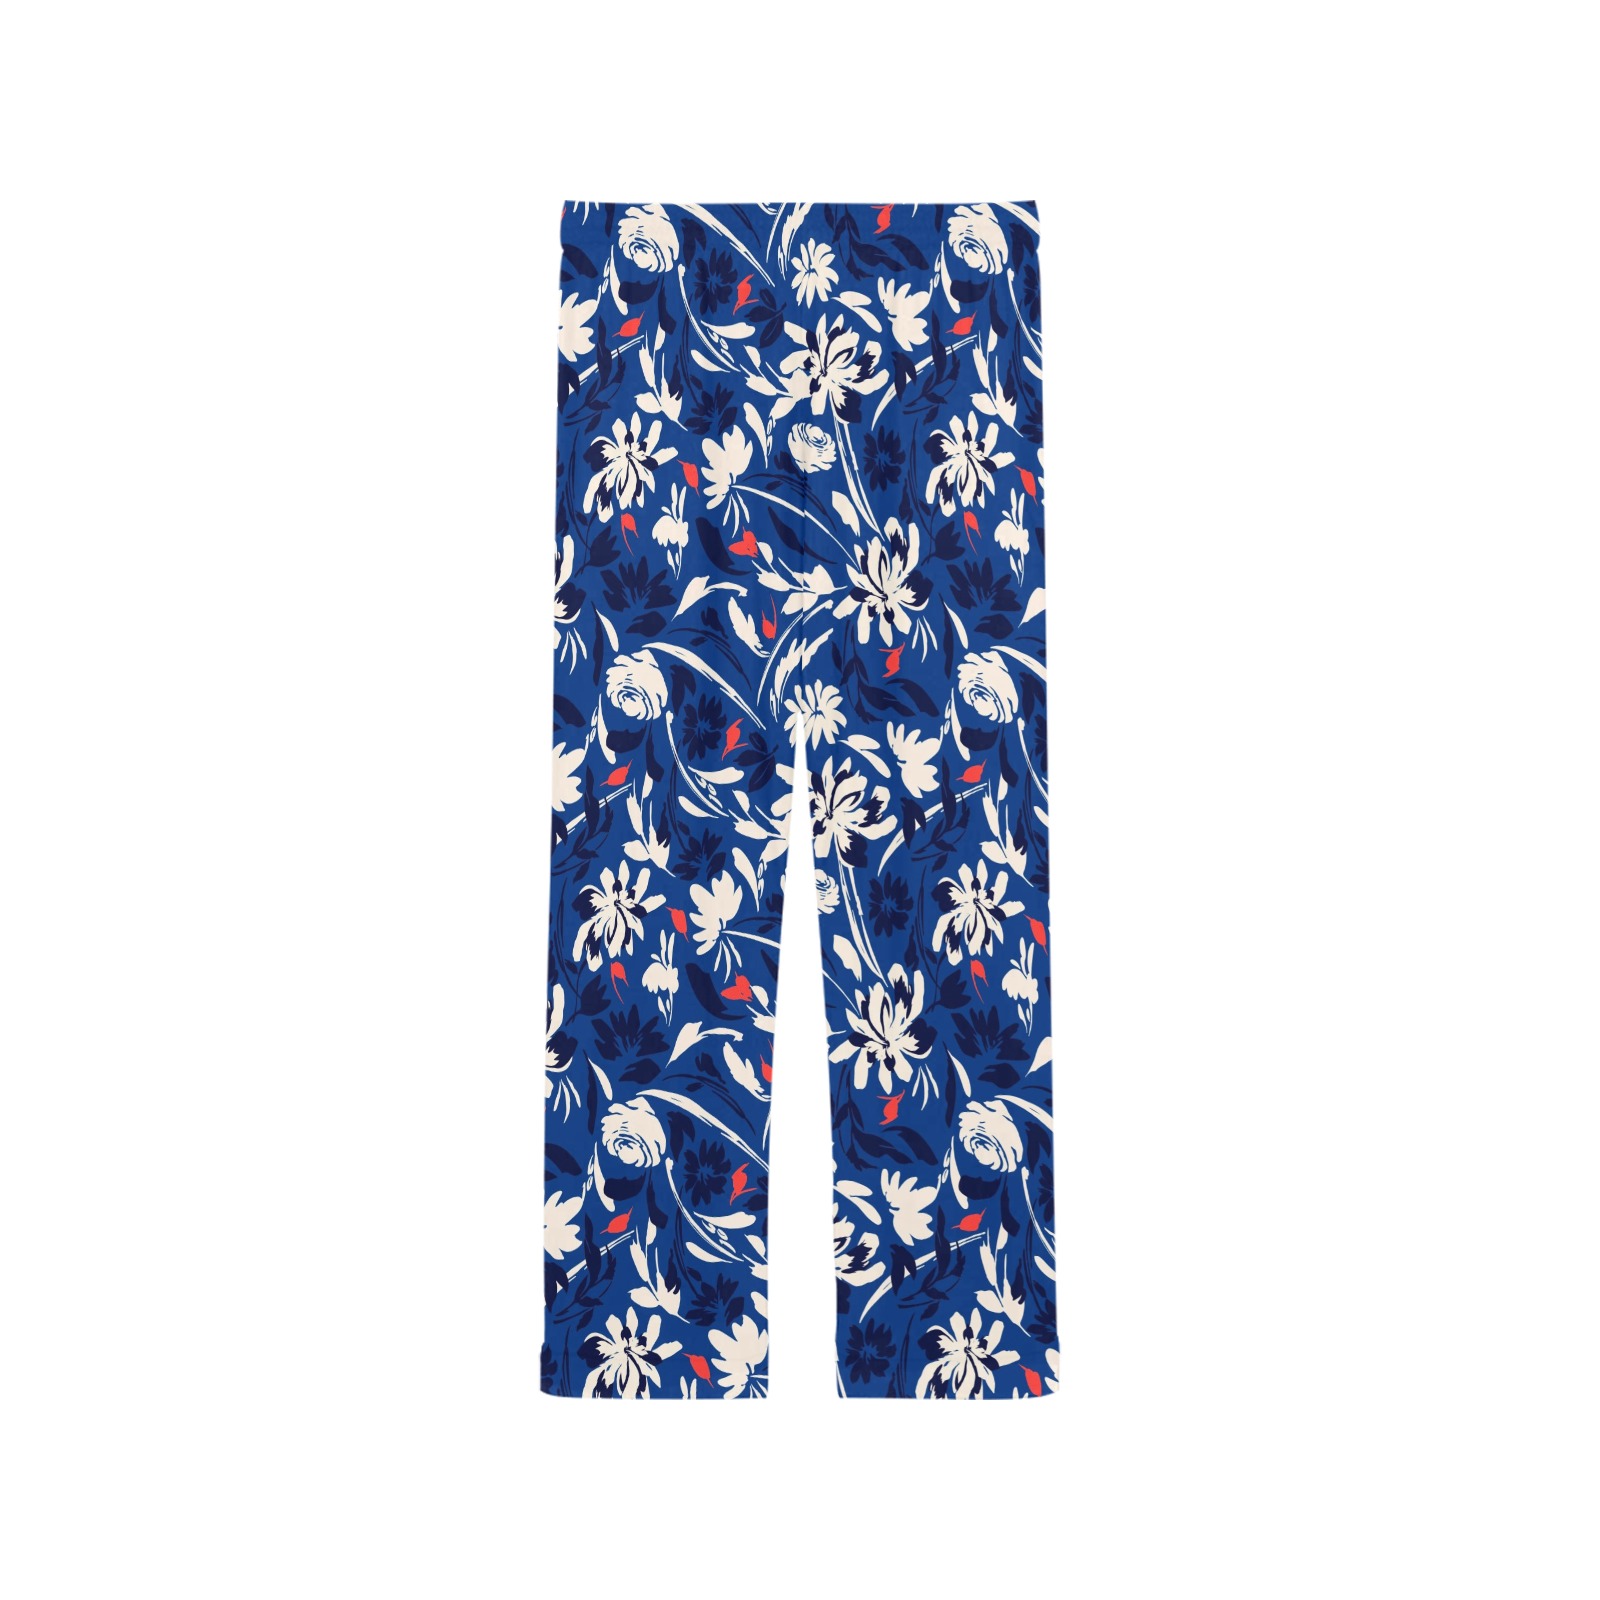 Brushstrokes floral garden BP Women's Pajama Trousers